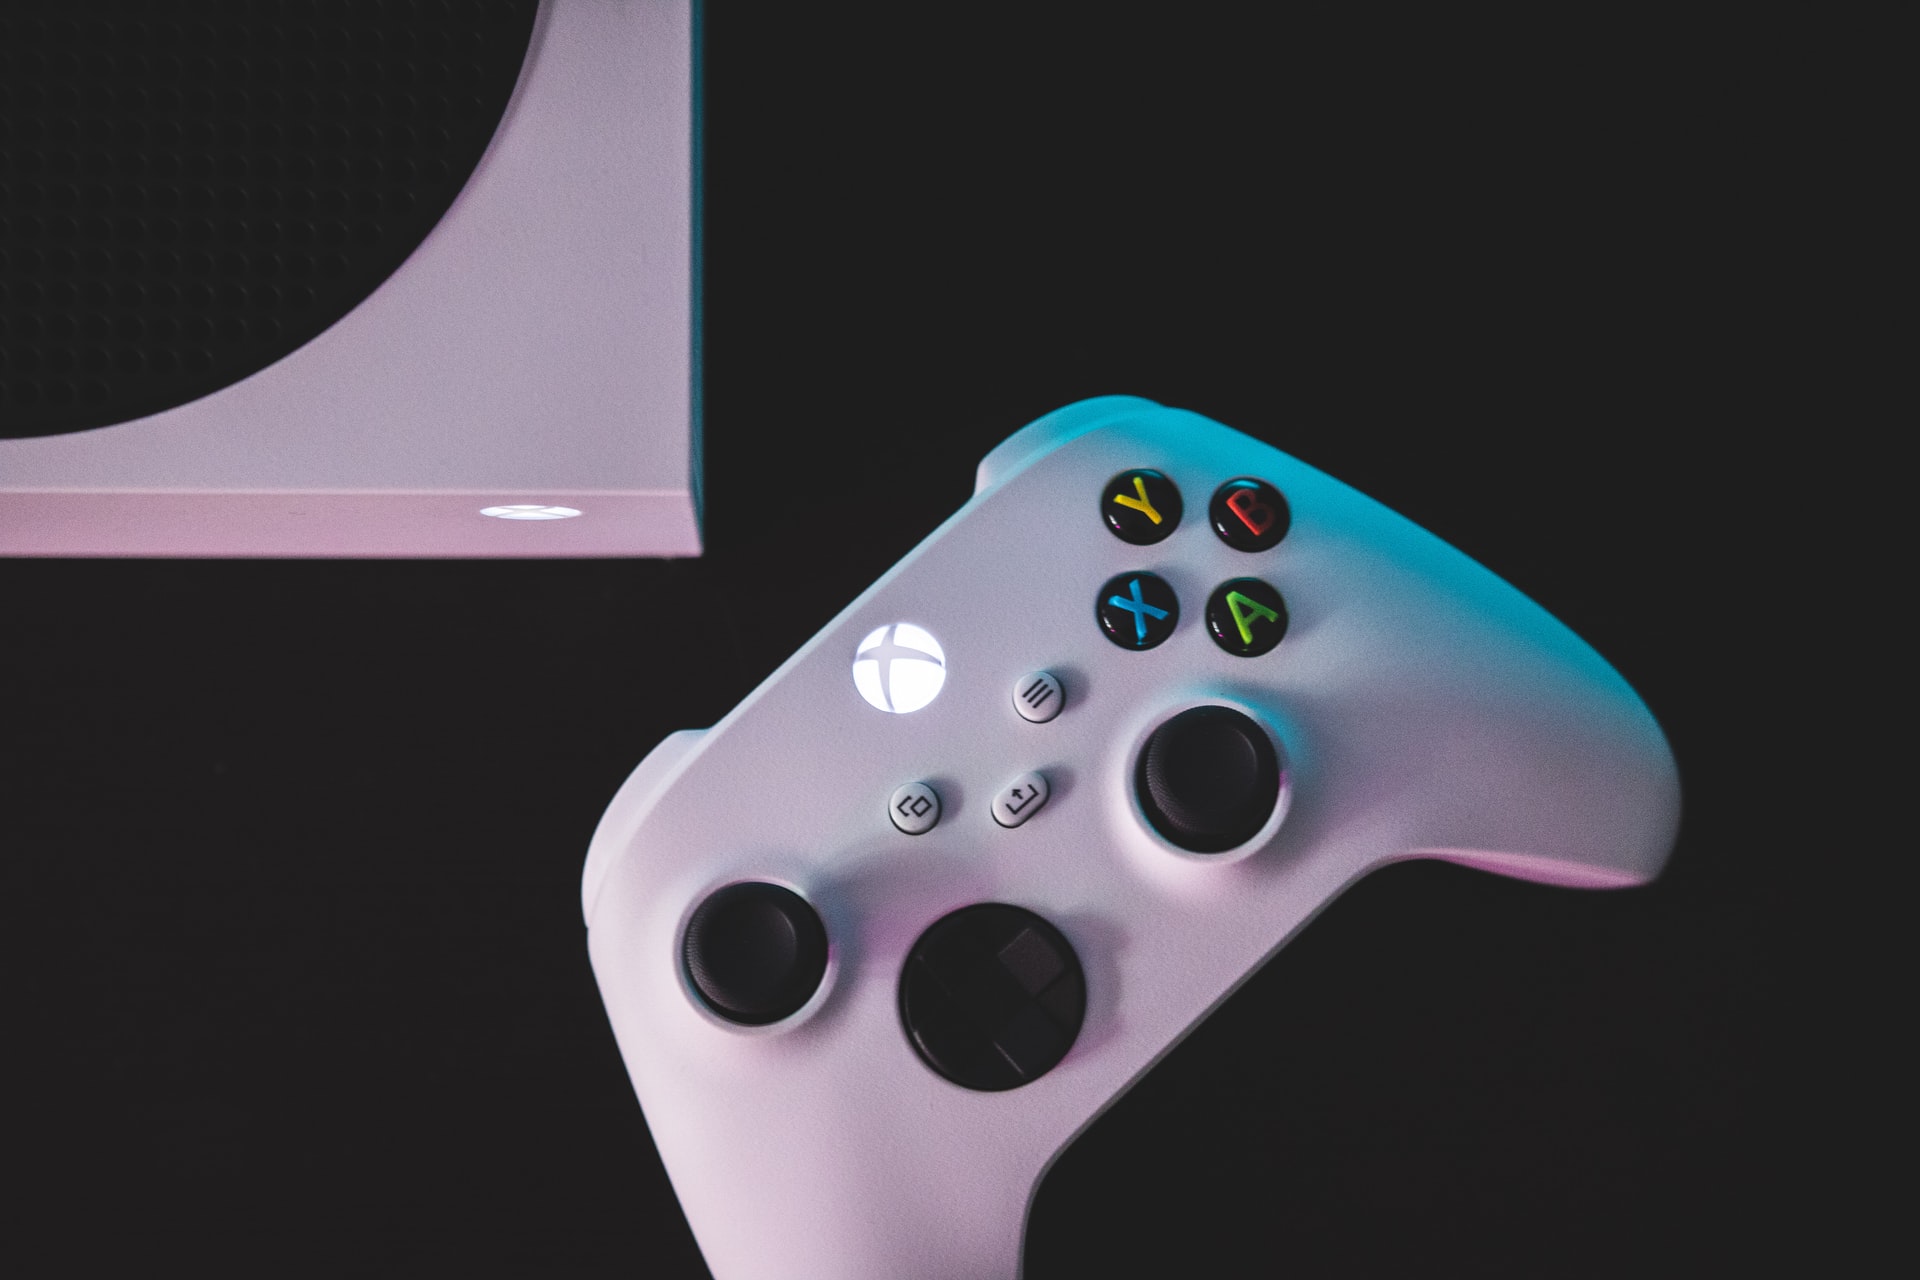 Xbox controller image